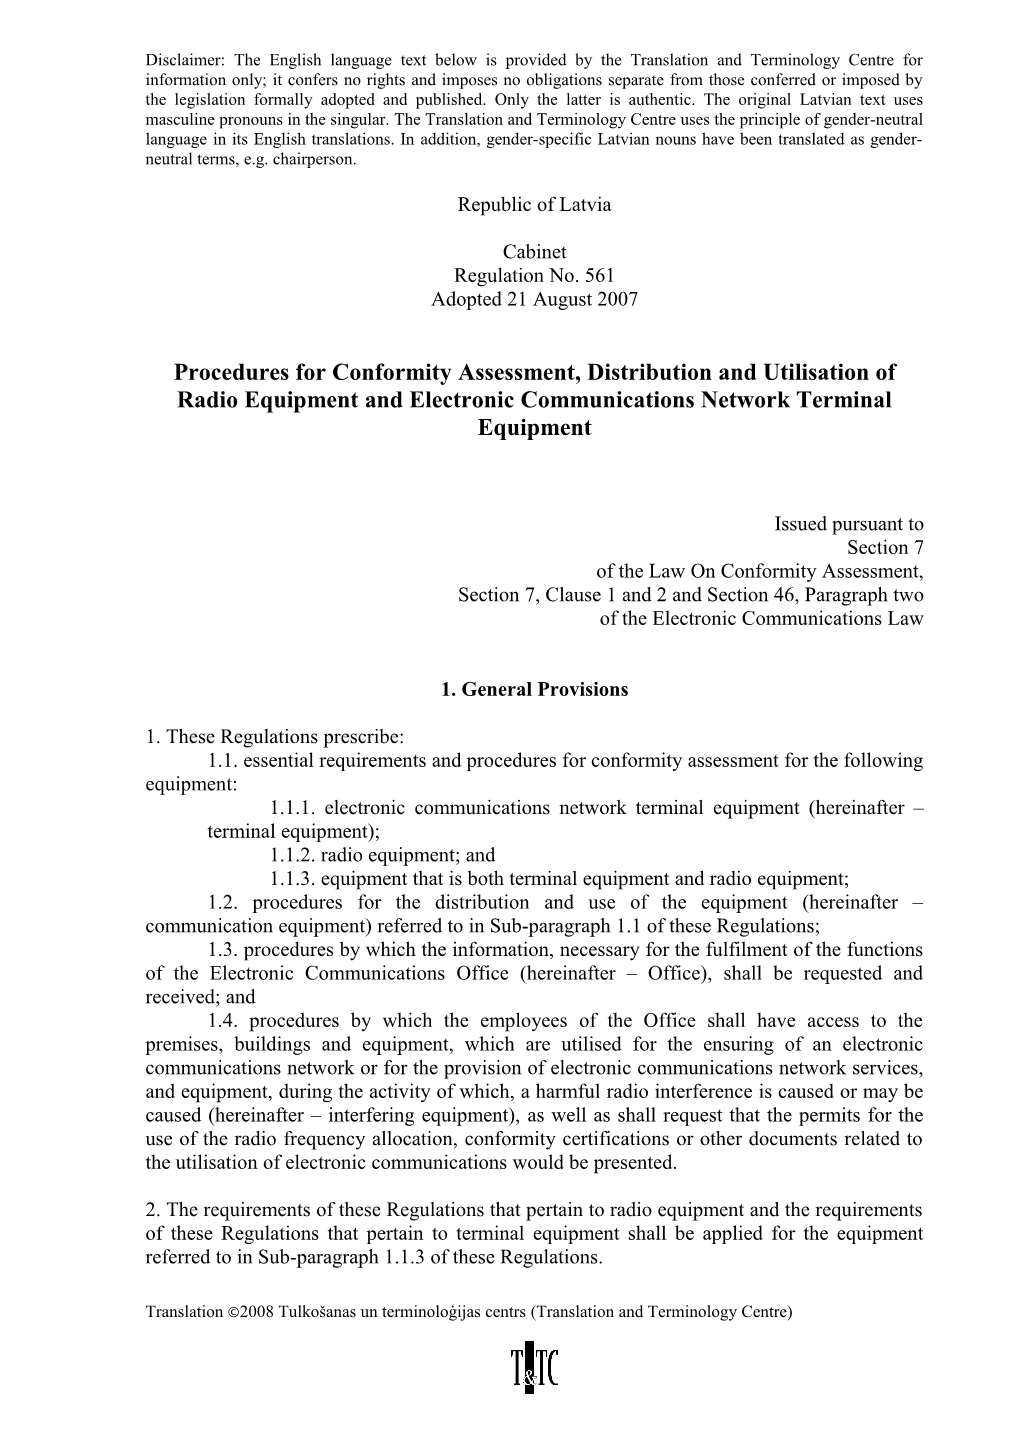 Procedures for Conformity Assessment, Distribution and Utilisation of Radio Equipment